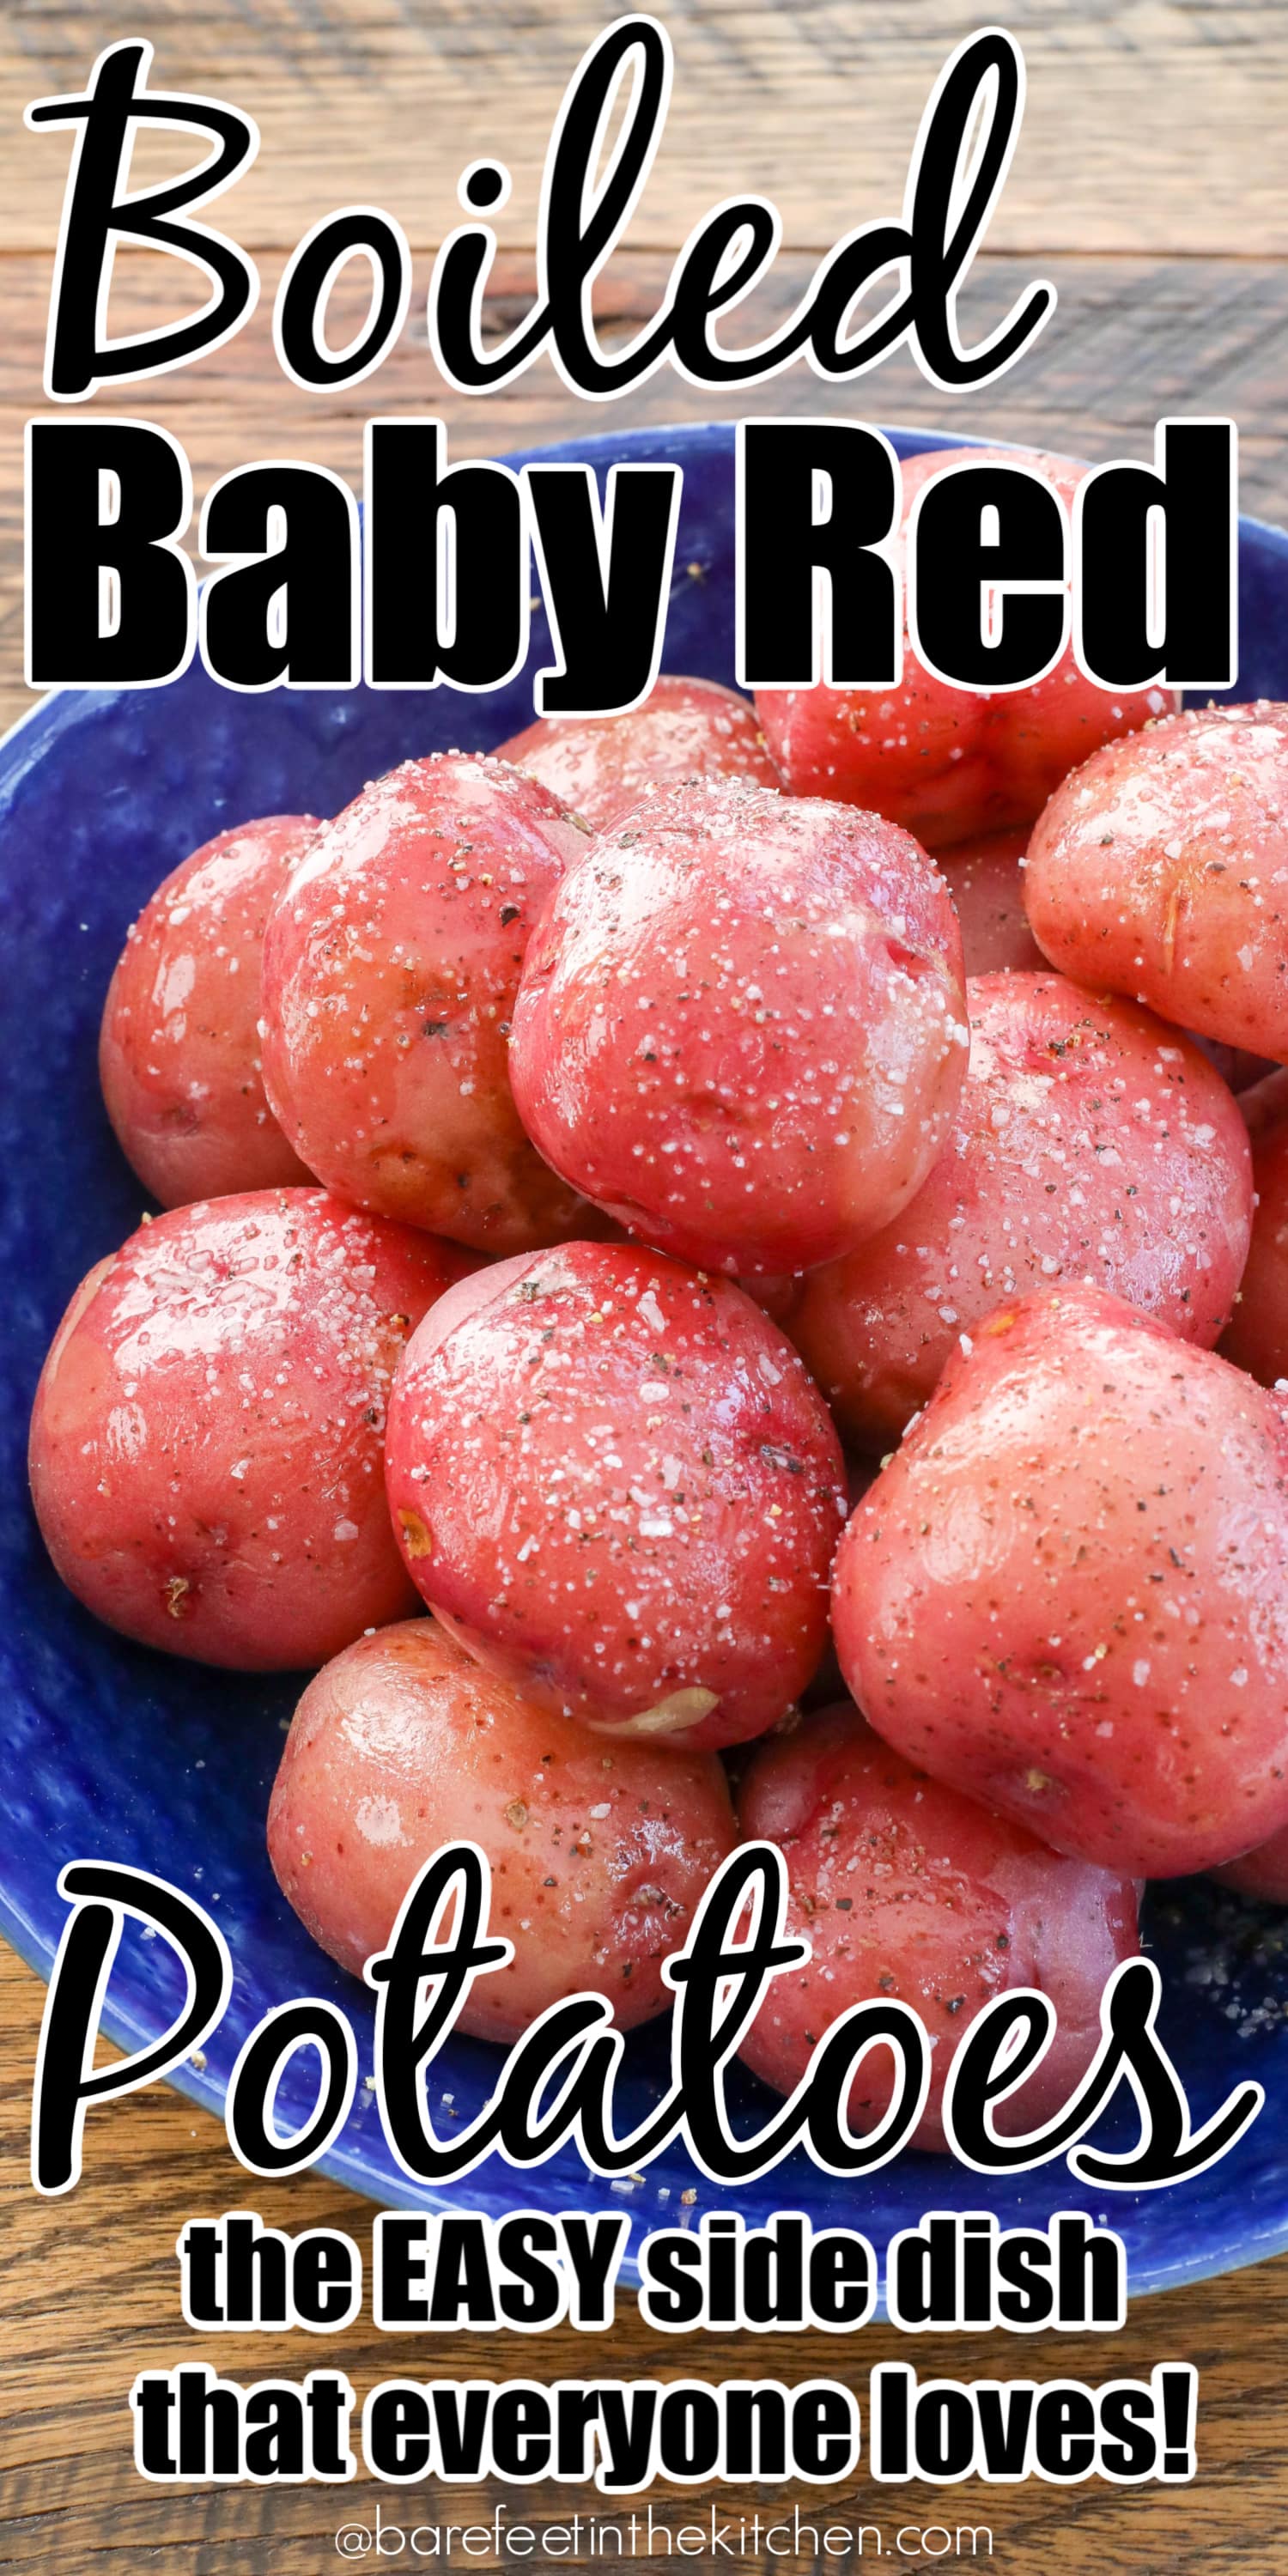 https://barefeetinthekitchen.com/wp-content/uploads/2011/07/Boiled-Red-Potatoes-3.jpg